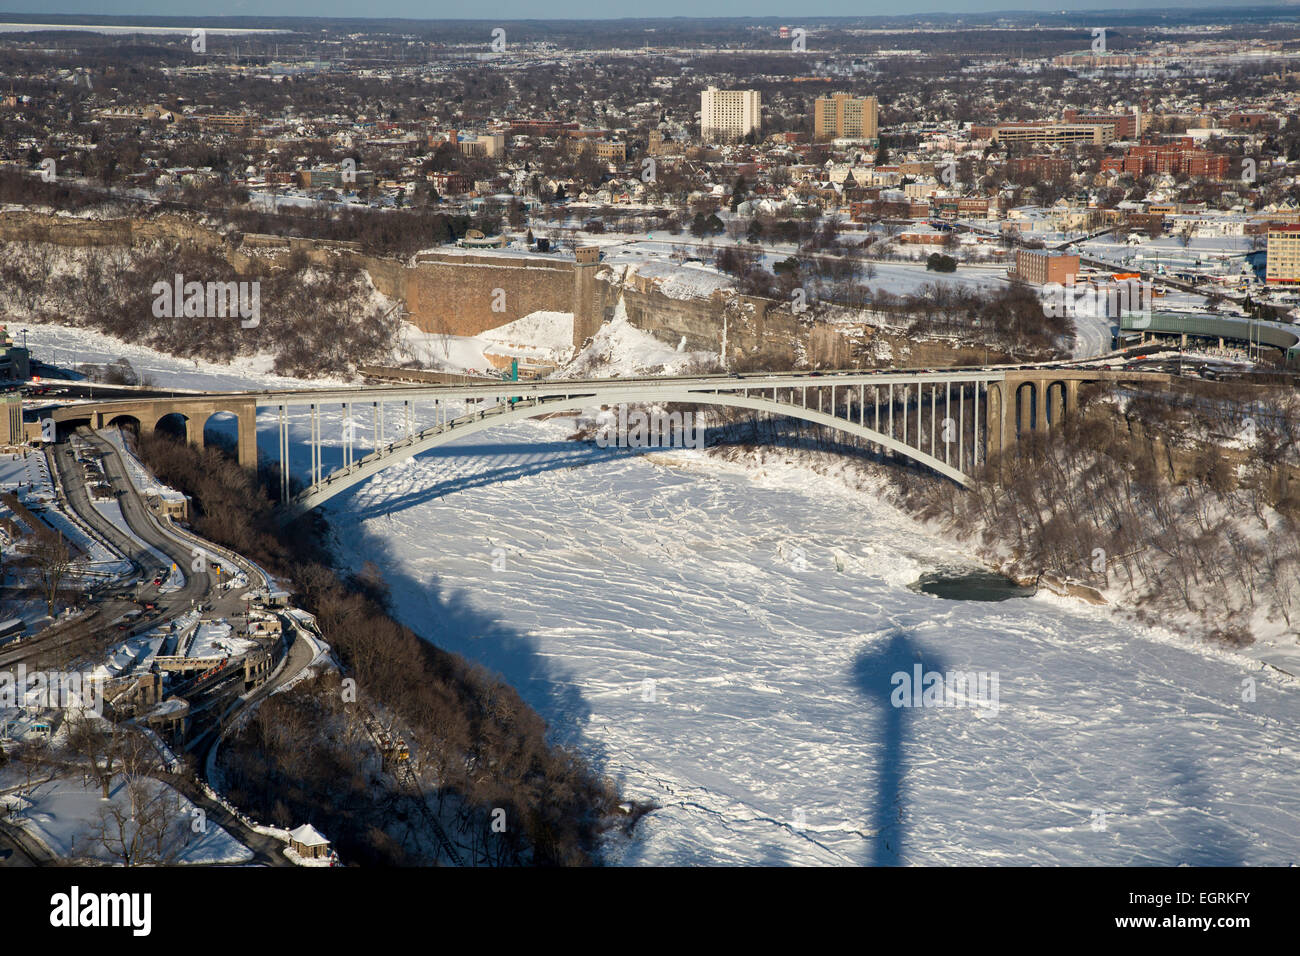 Niagara Falls, Ontario - Le pont en arc-en-ciel sur le passage frontalier international Frozen Niagara Falls. Banque D'Images